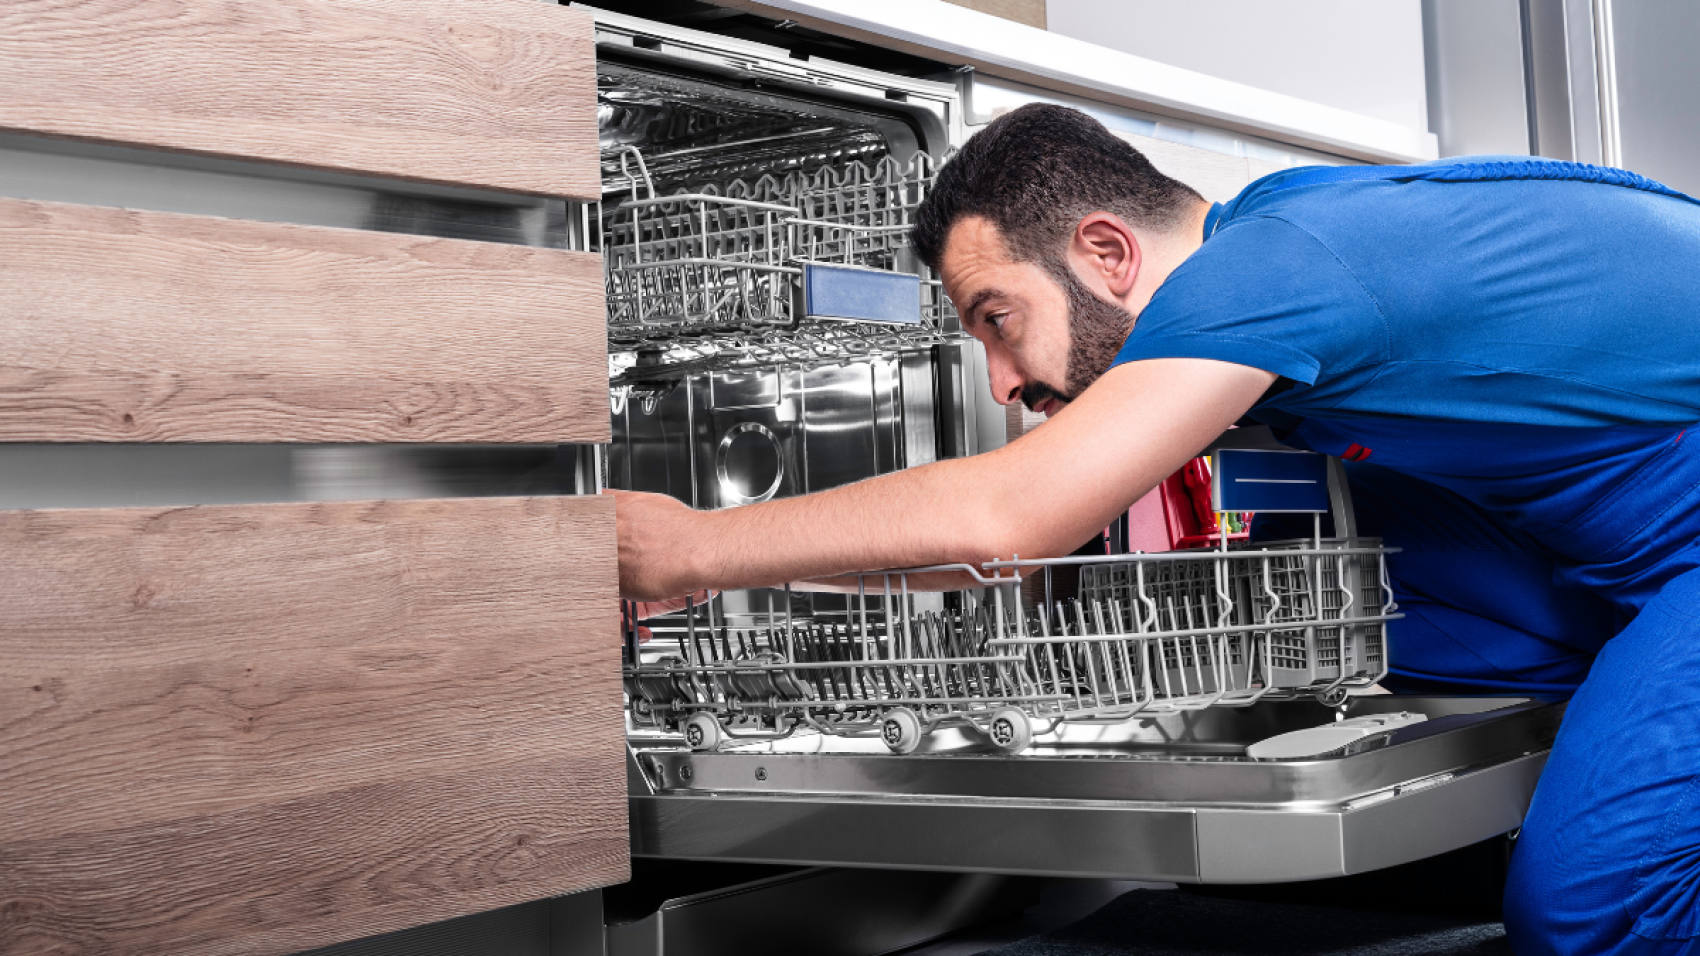 LG Dishwasher Cleaning Tips